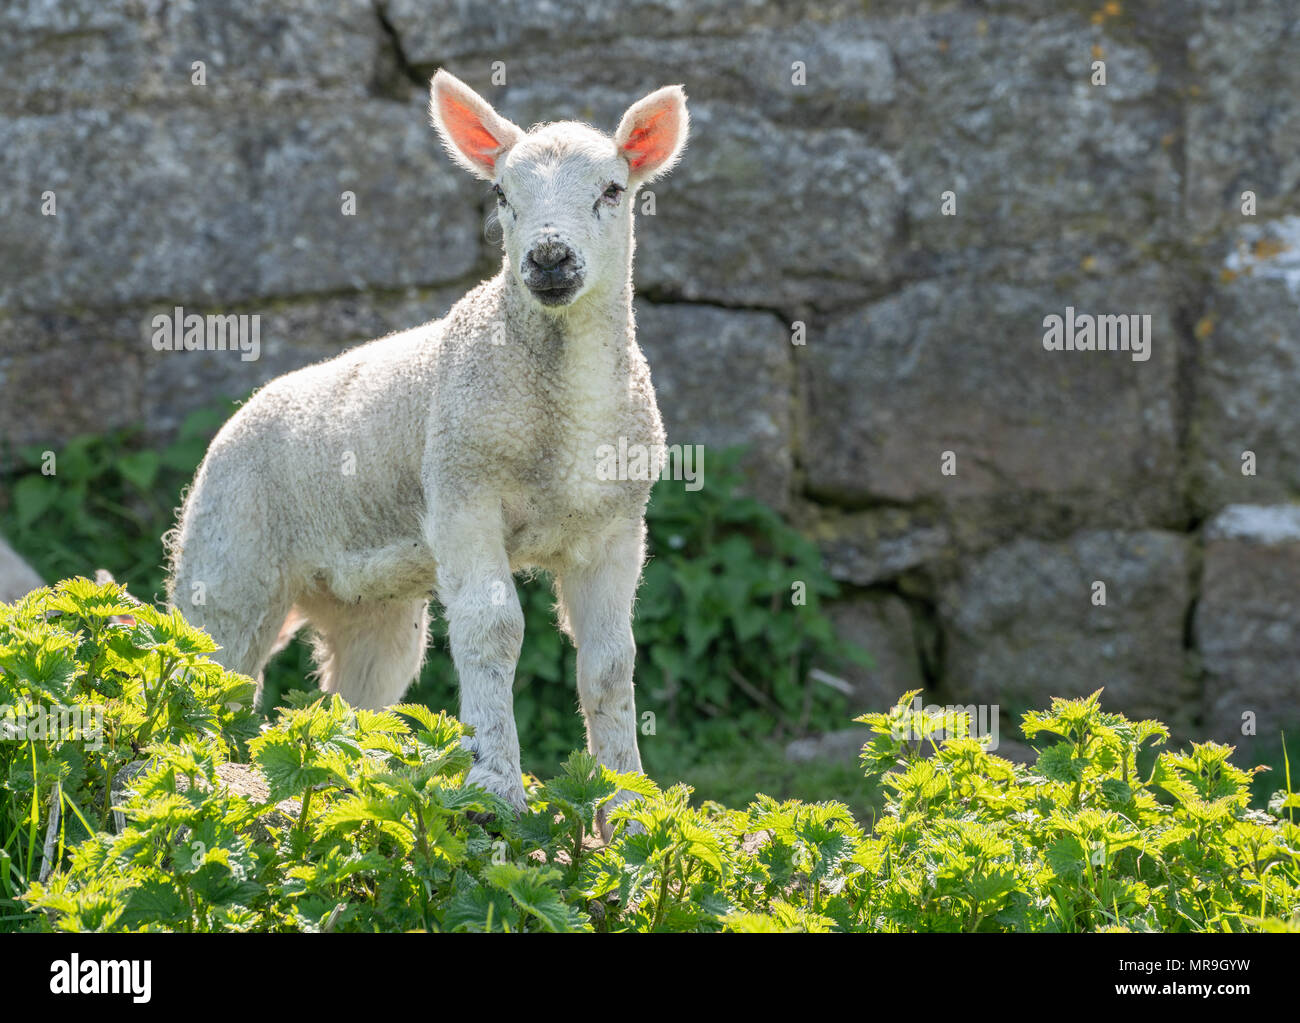 Single new born lamb backlit against stone wall Stock Photo